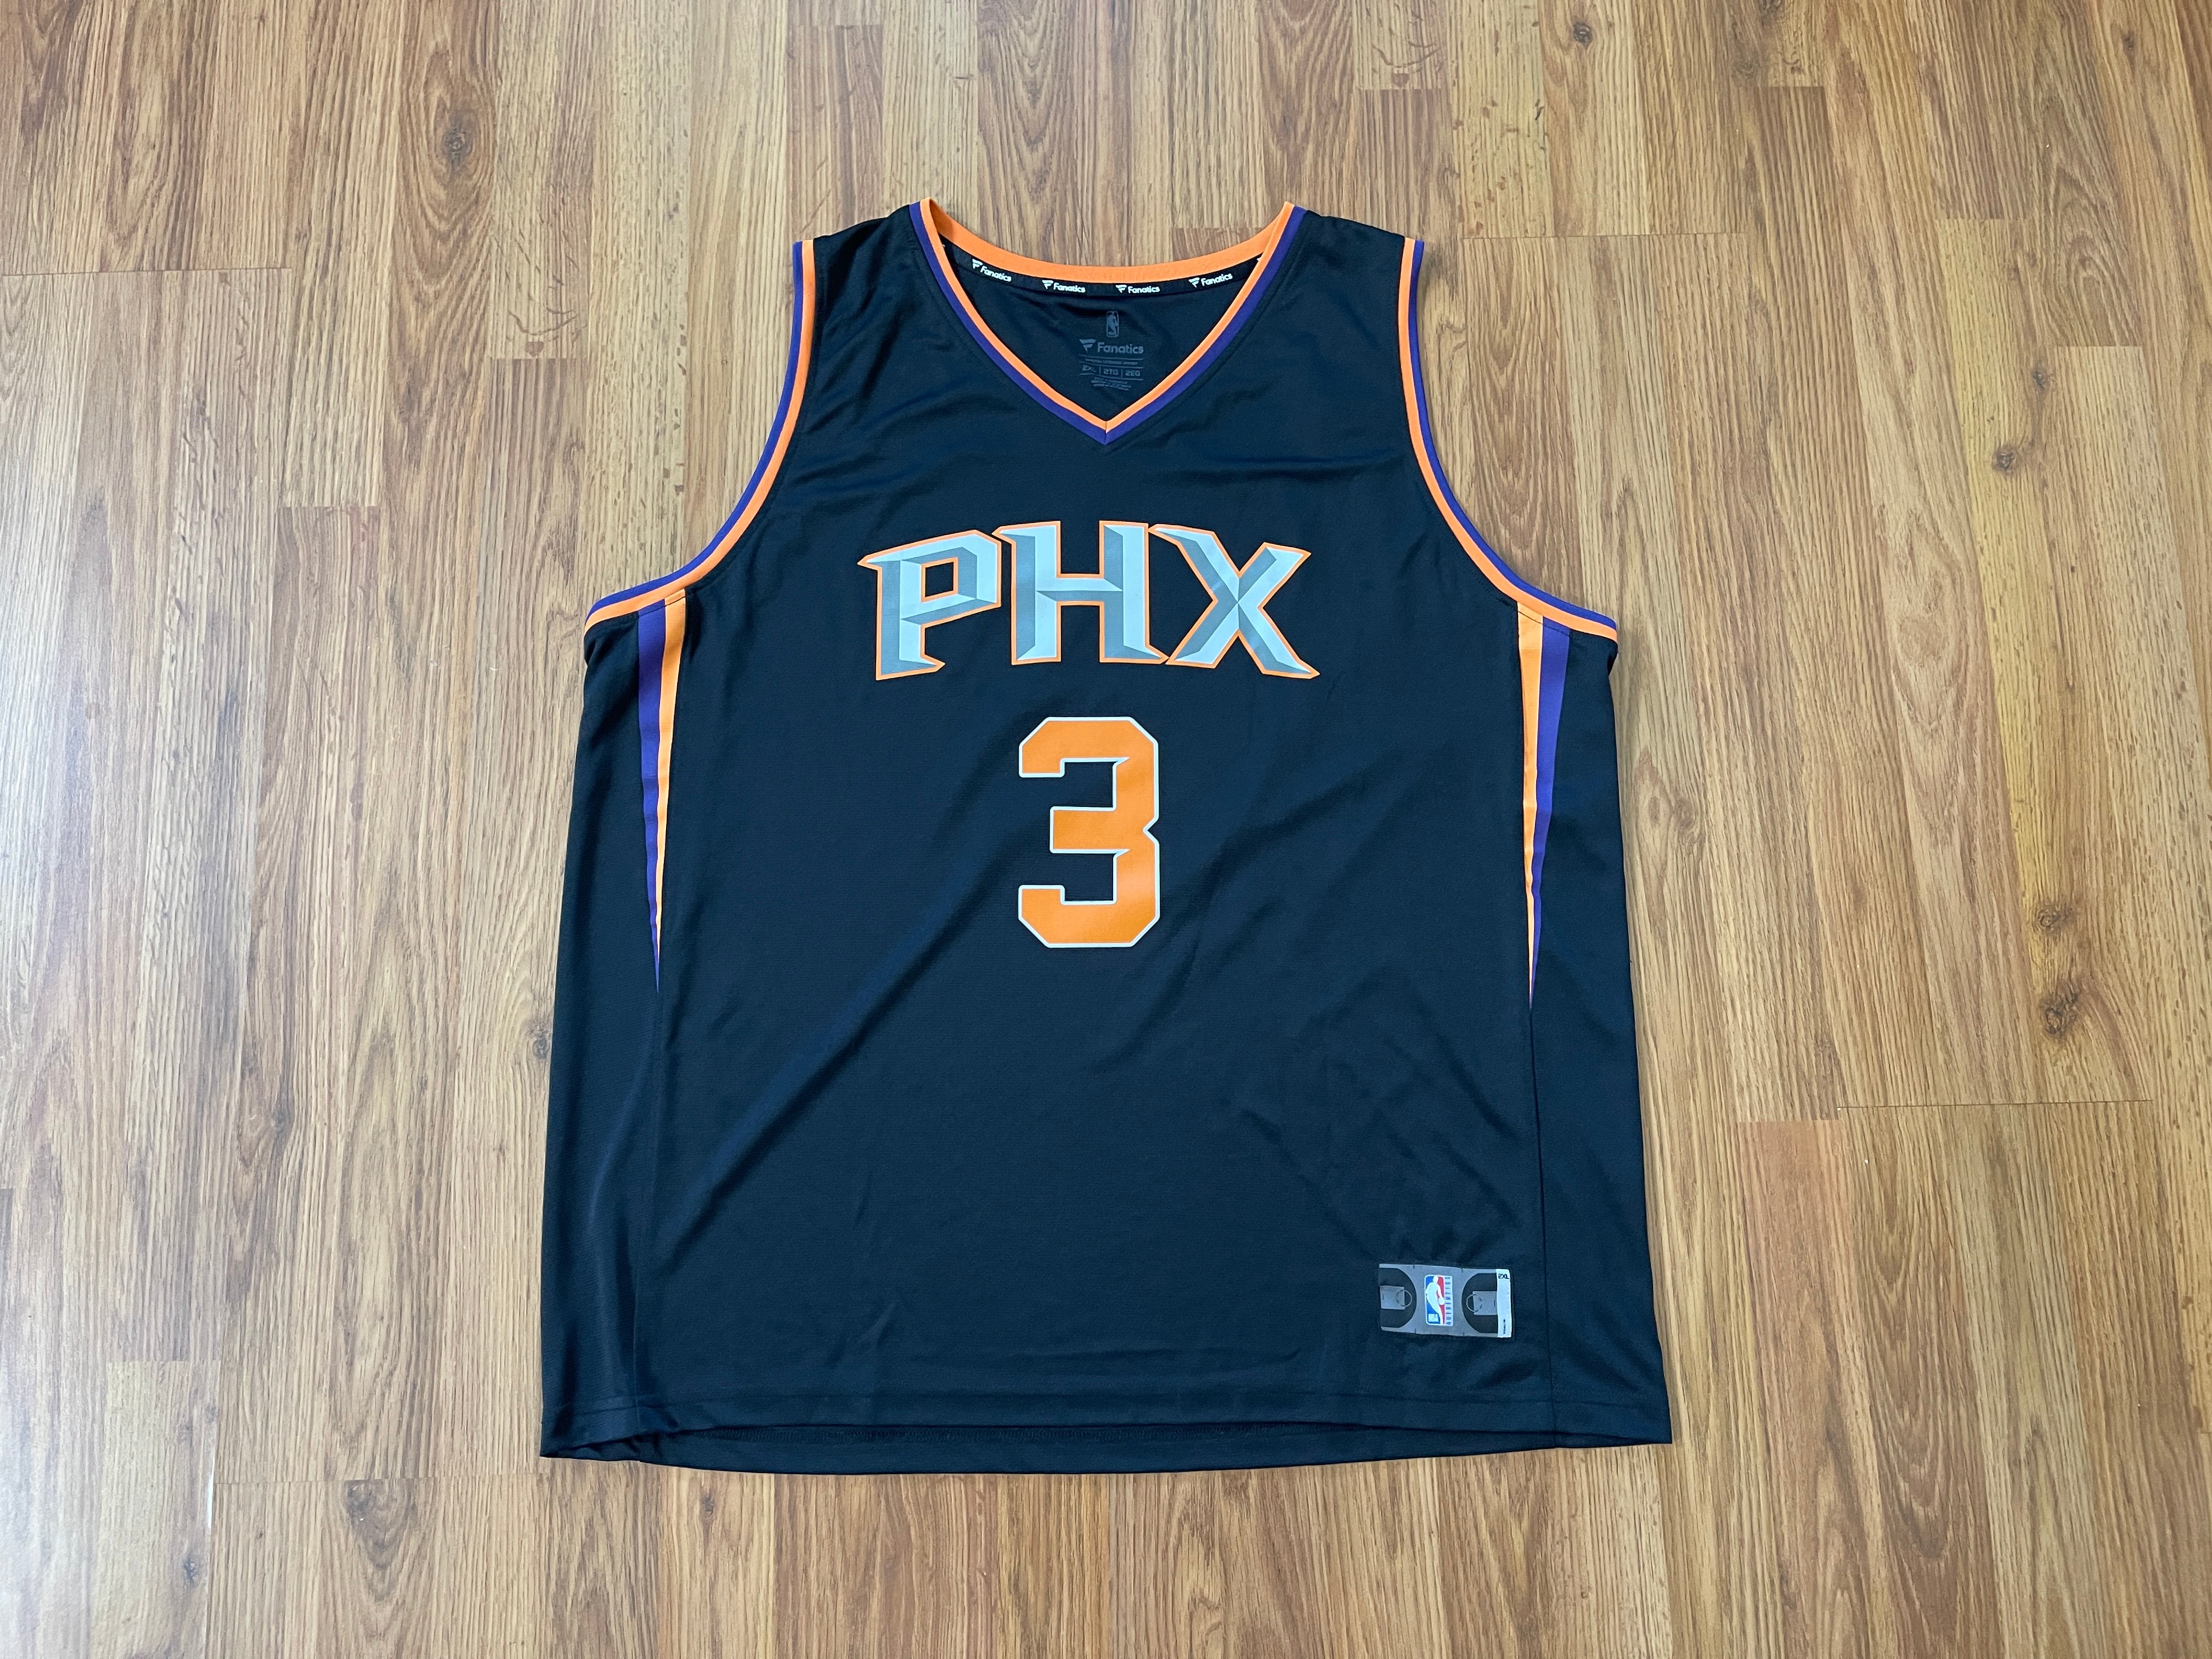 NBA Phoenix Suns ADIDAS Reversible Basketball Practice Jersey